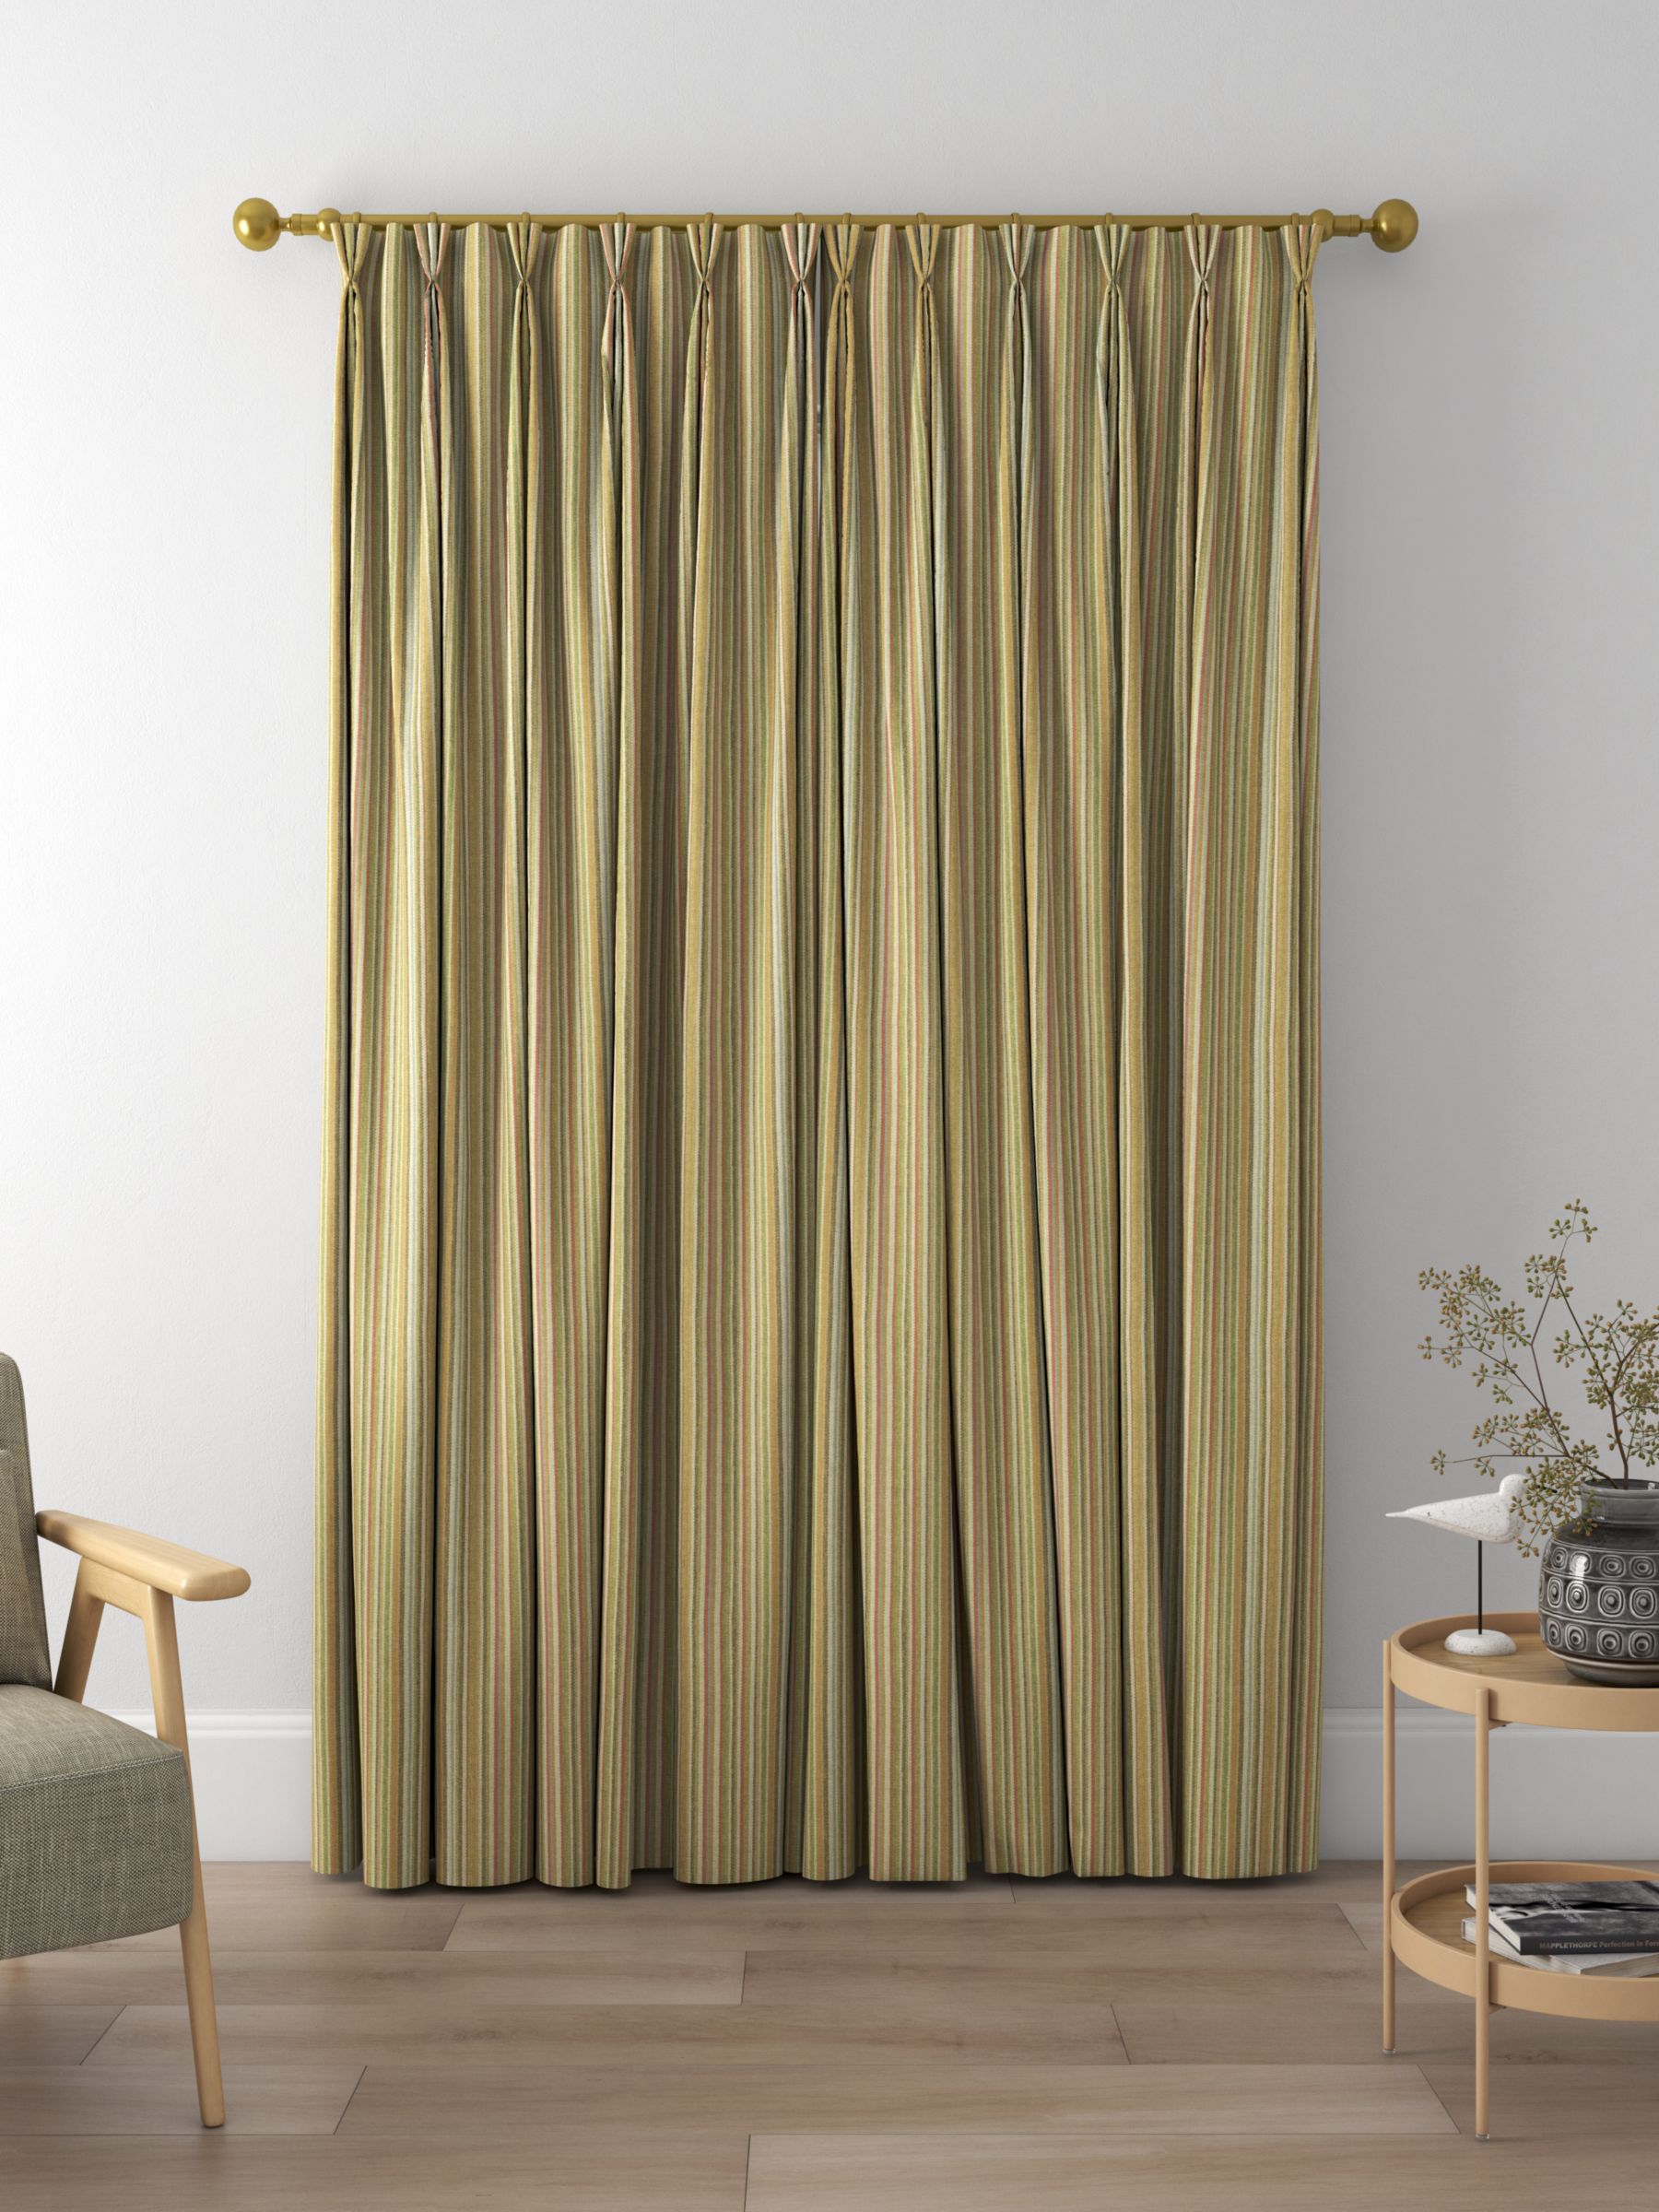 Prestigious Textiles Drummond Made to Measure Curtains, Auburn